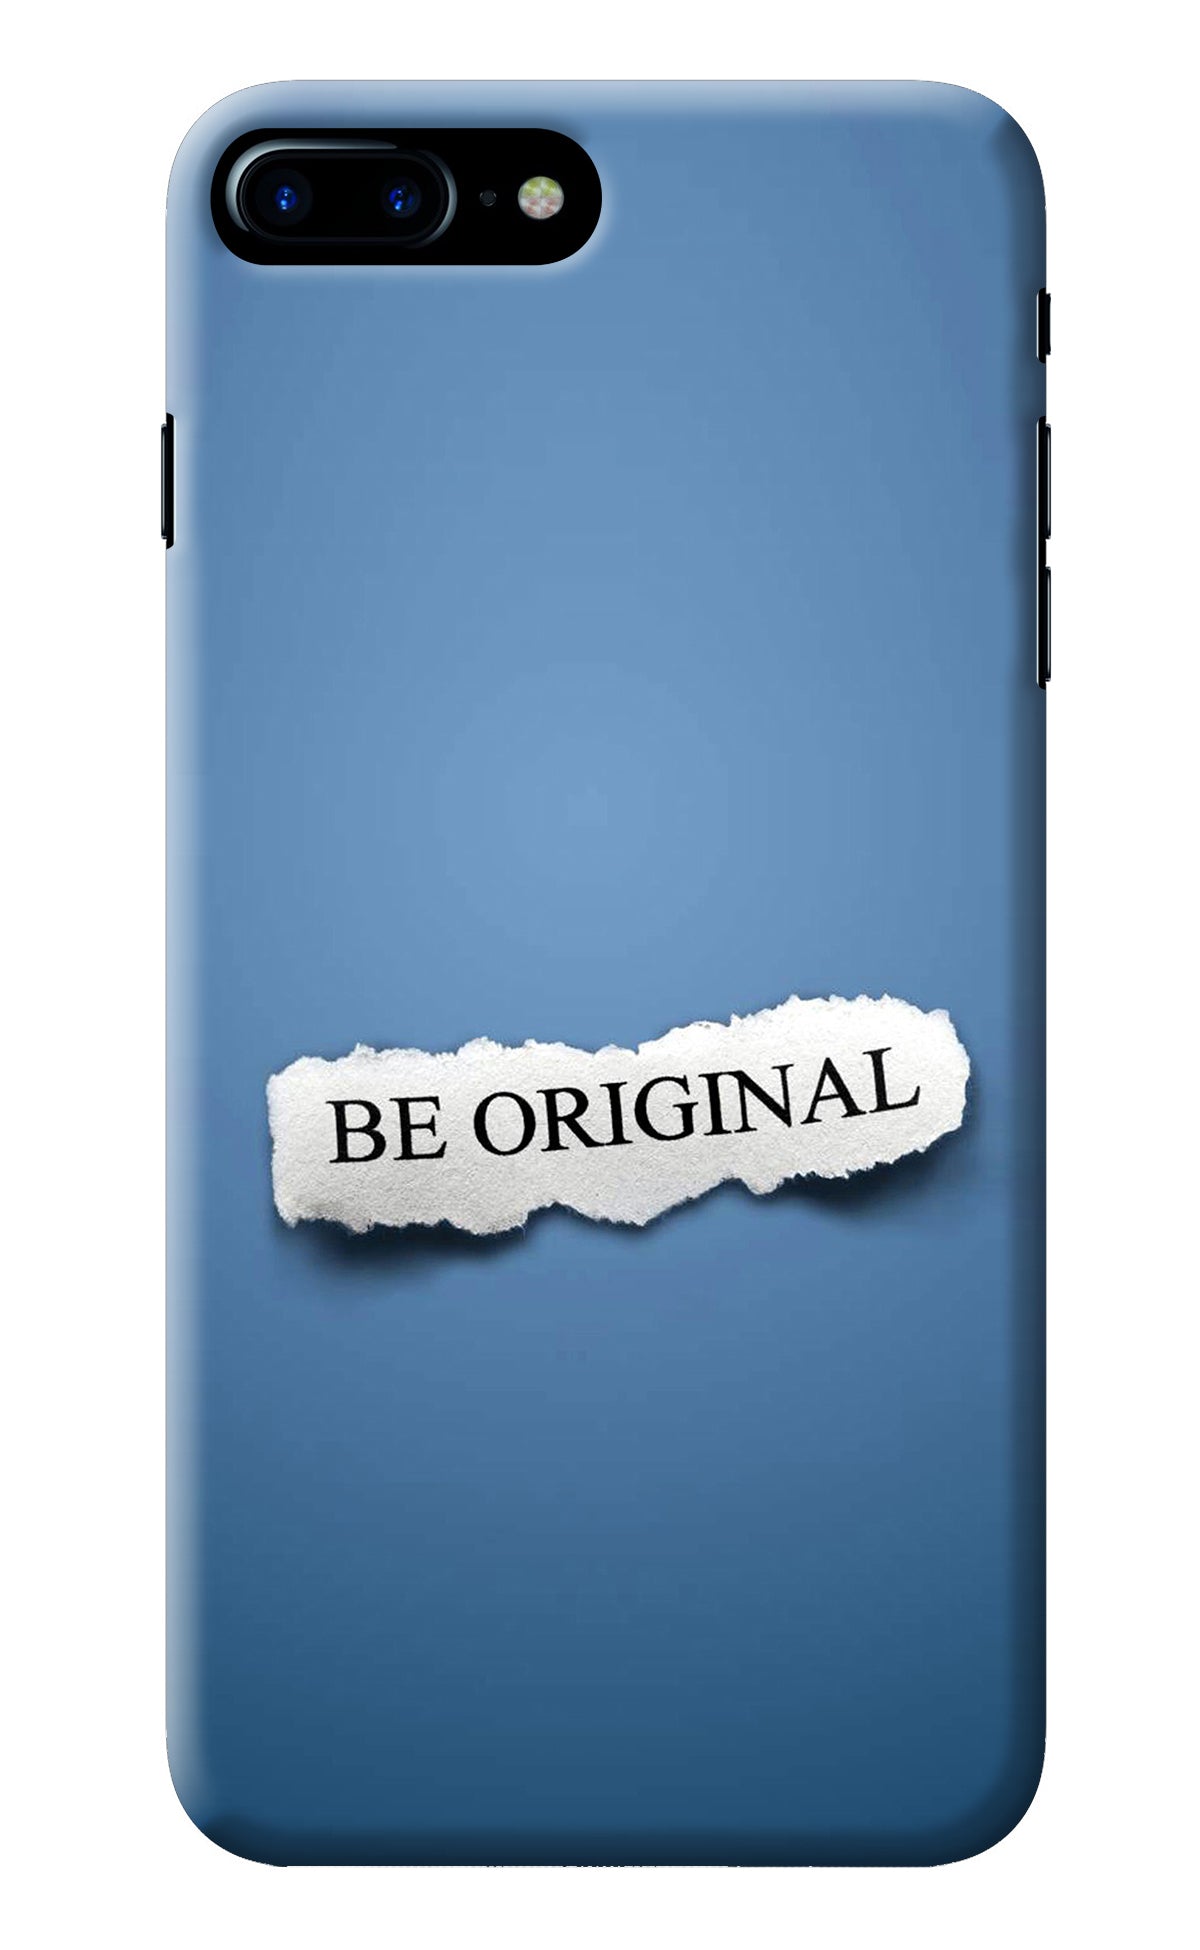 Be Original iPhone 8 Plus Back Cover